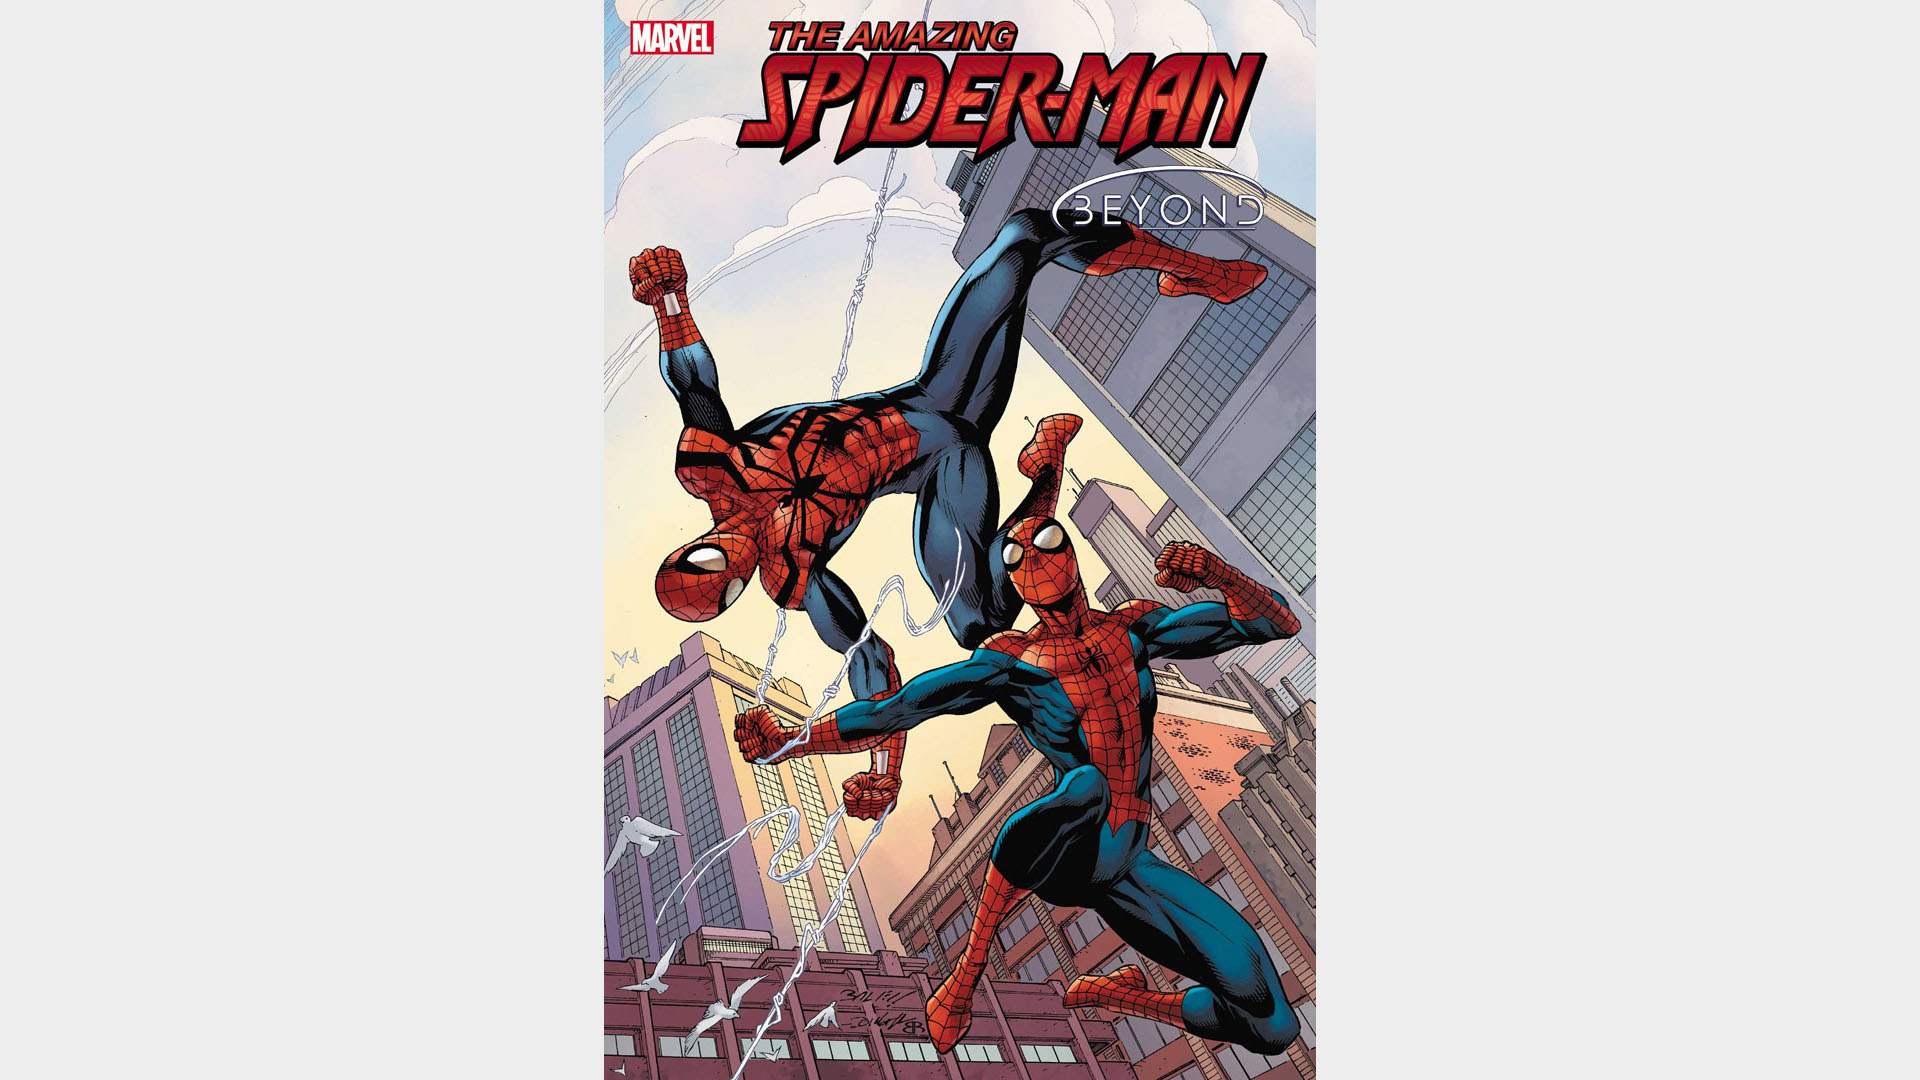 Amazing Spider-Man #93 cover